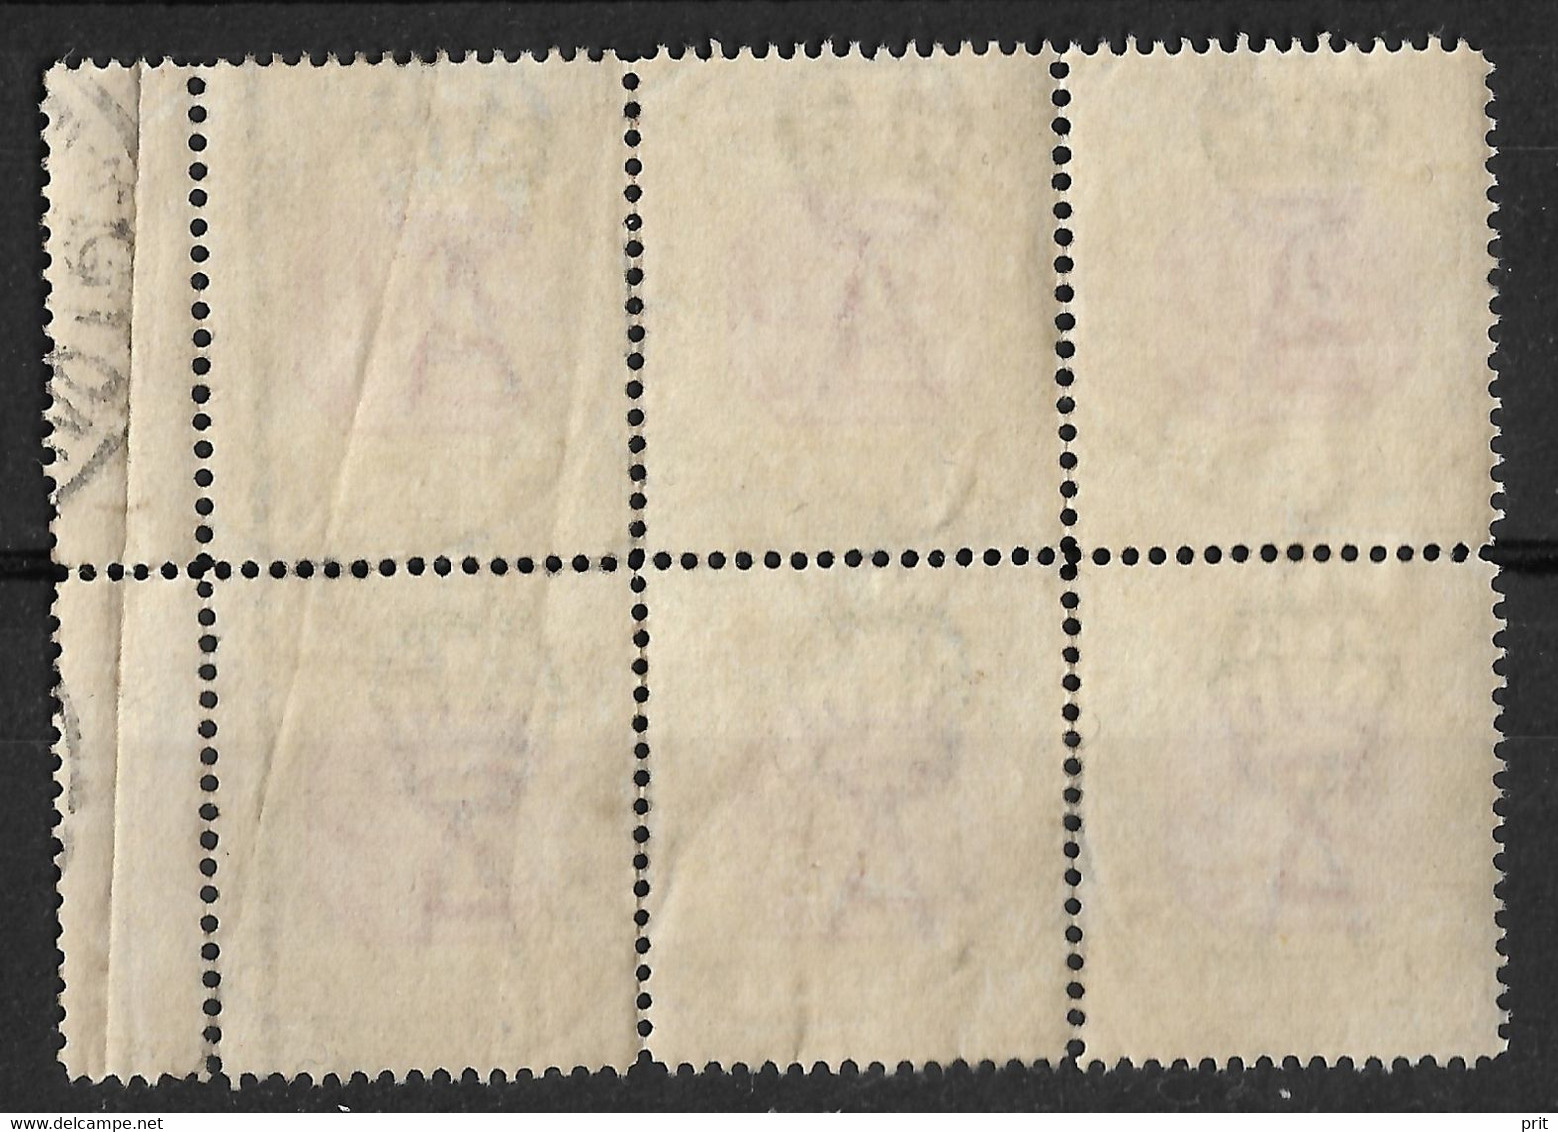 Australia 1922 2d Nice Block Of 6 Postage Due. SG D94. South Kensington N.S.W. Postmarks. Very Beautiful Item! - Portomarken